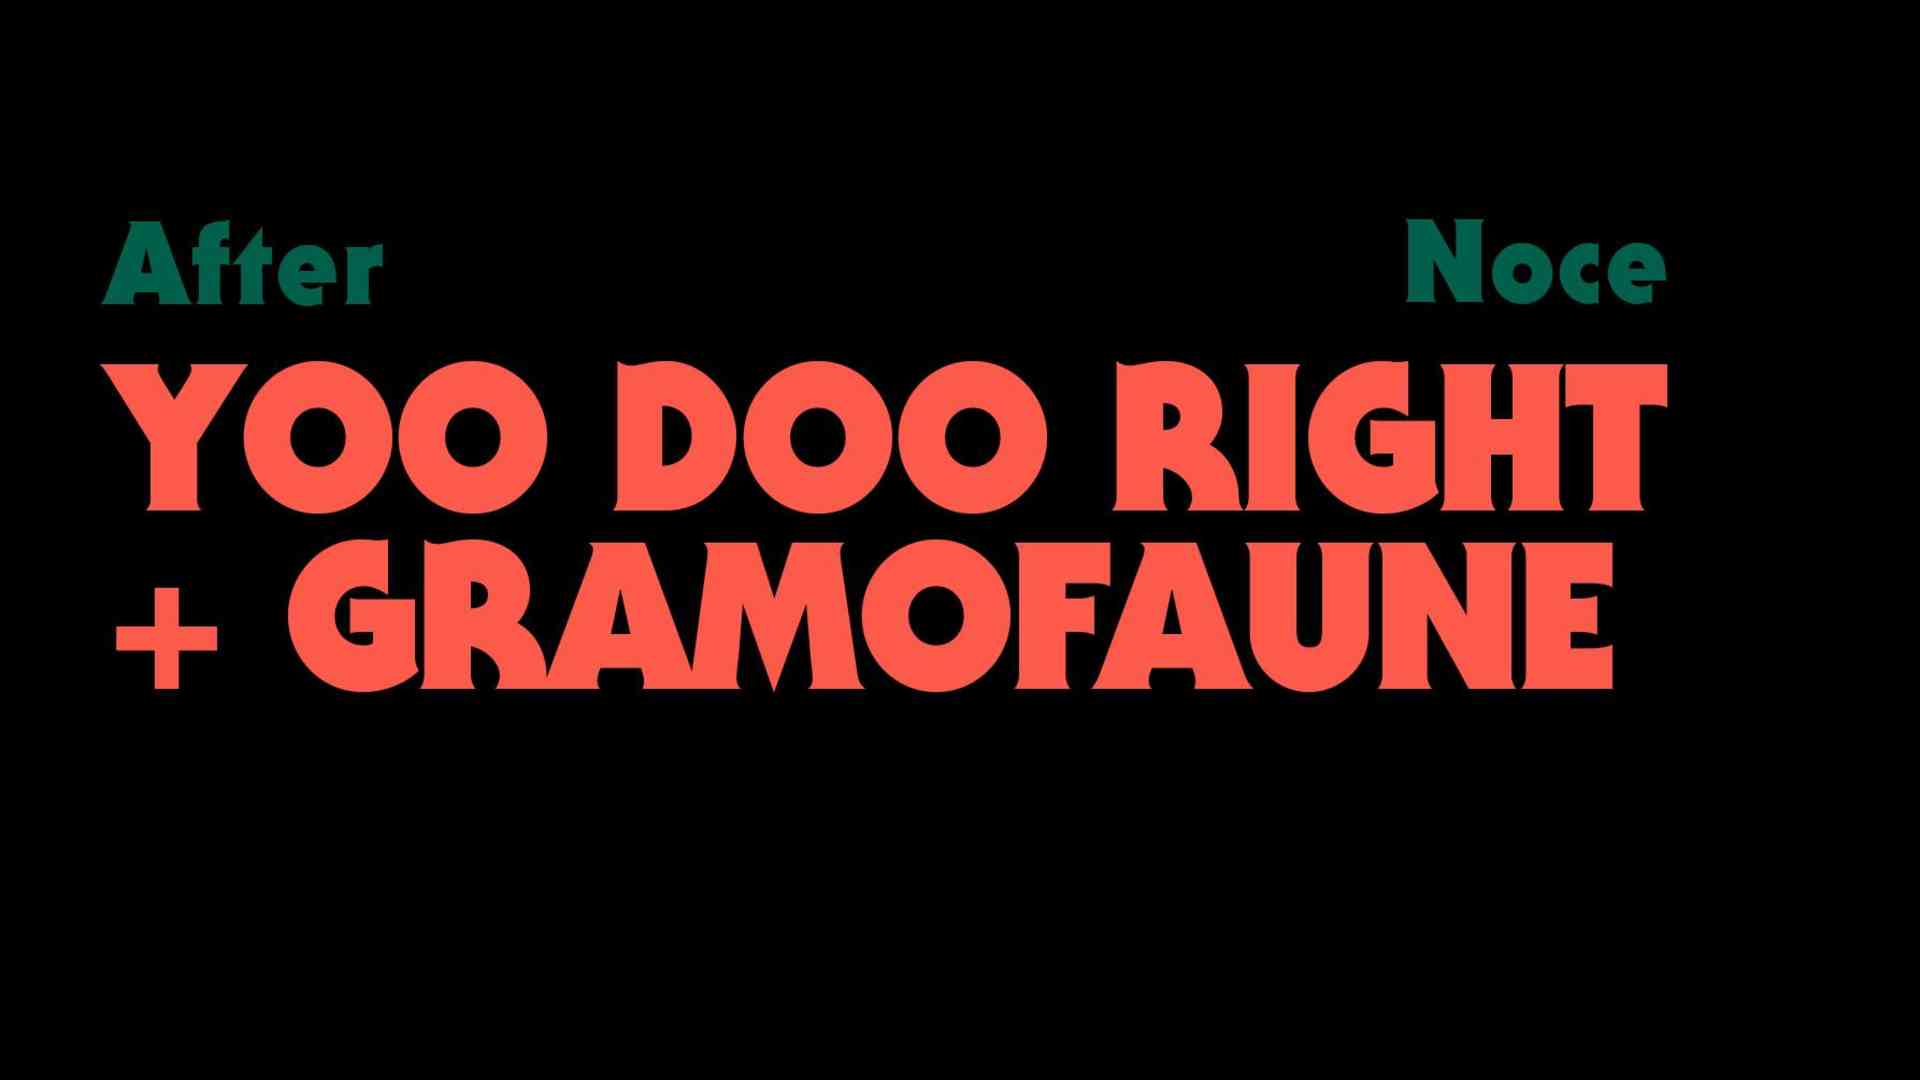 Yoo Doo Right + Gramofaune